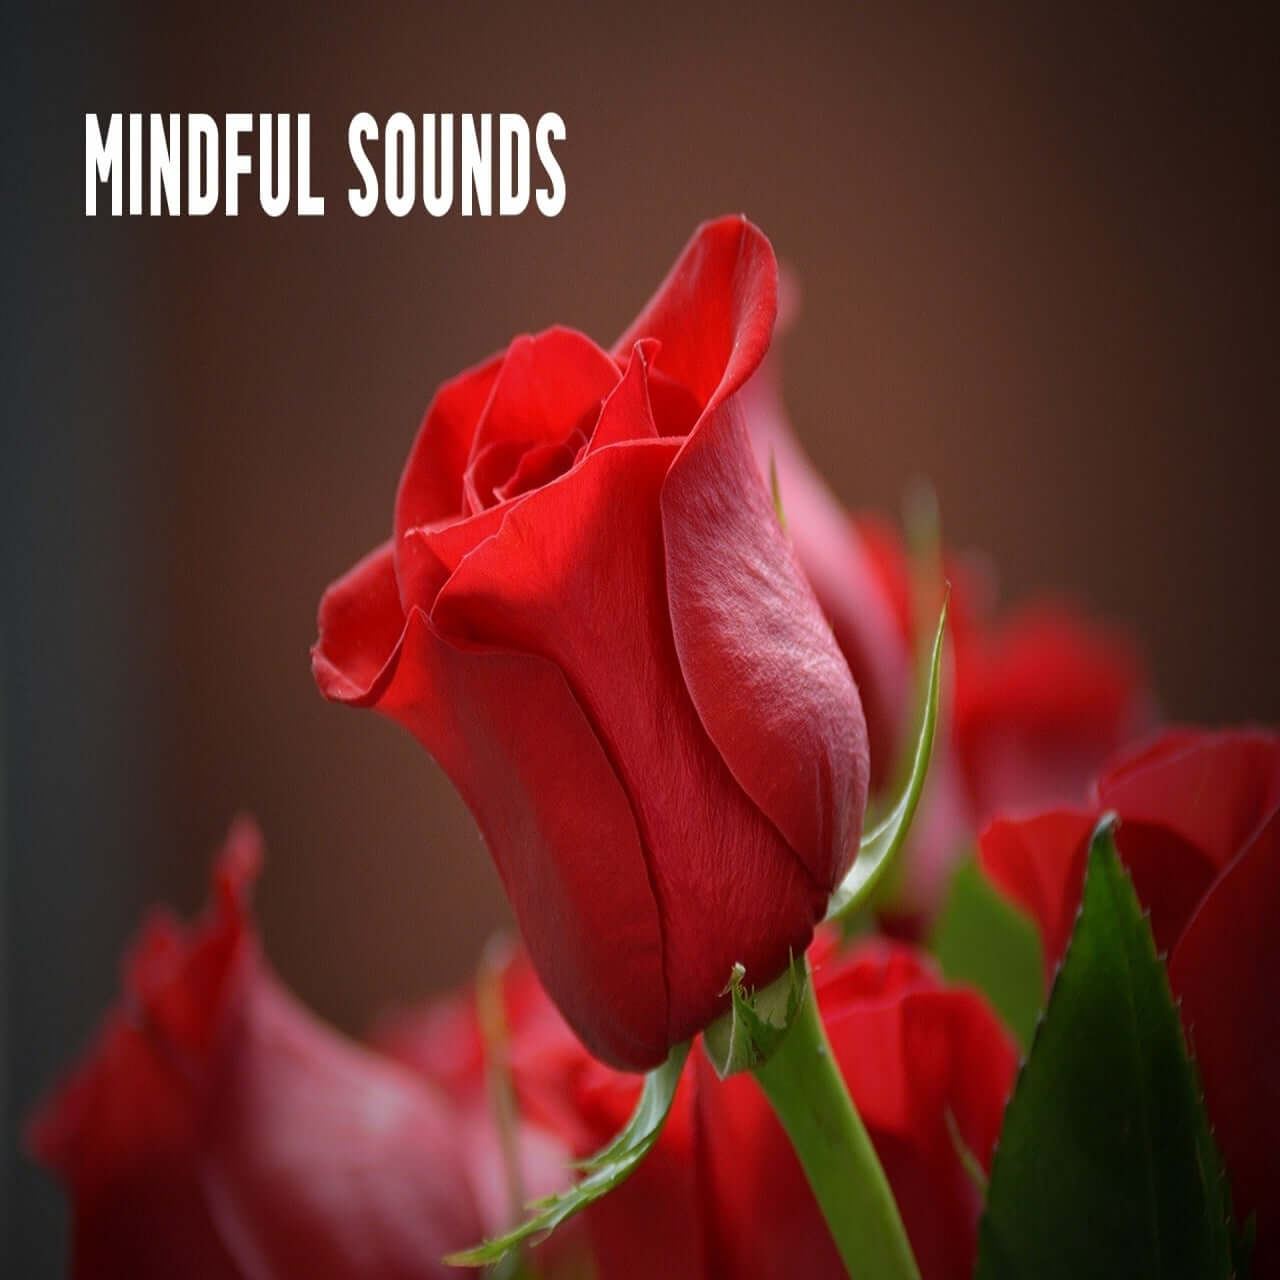 Mindful Sounds - Single Session